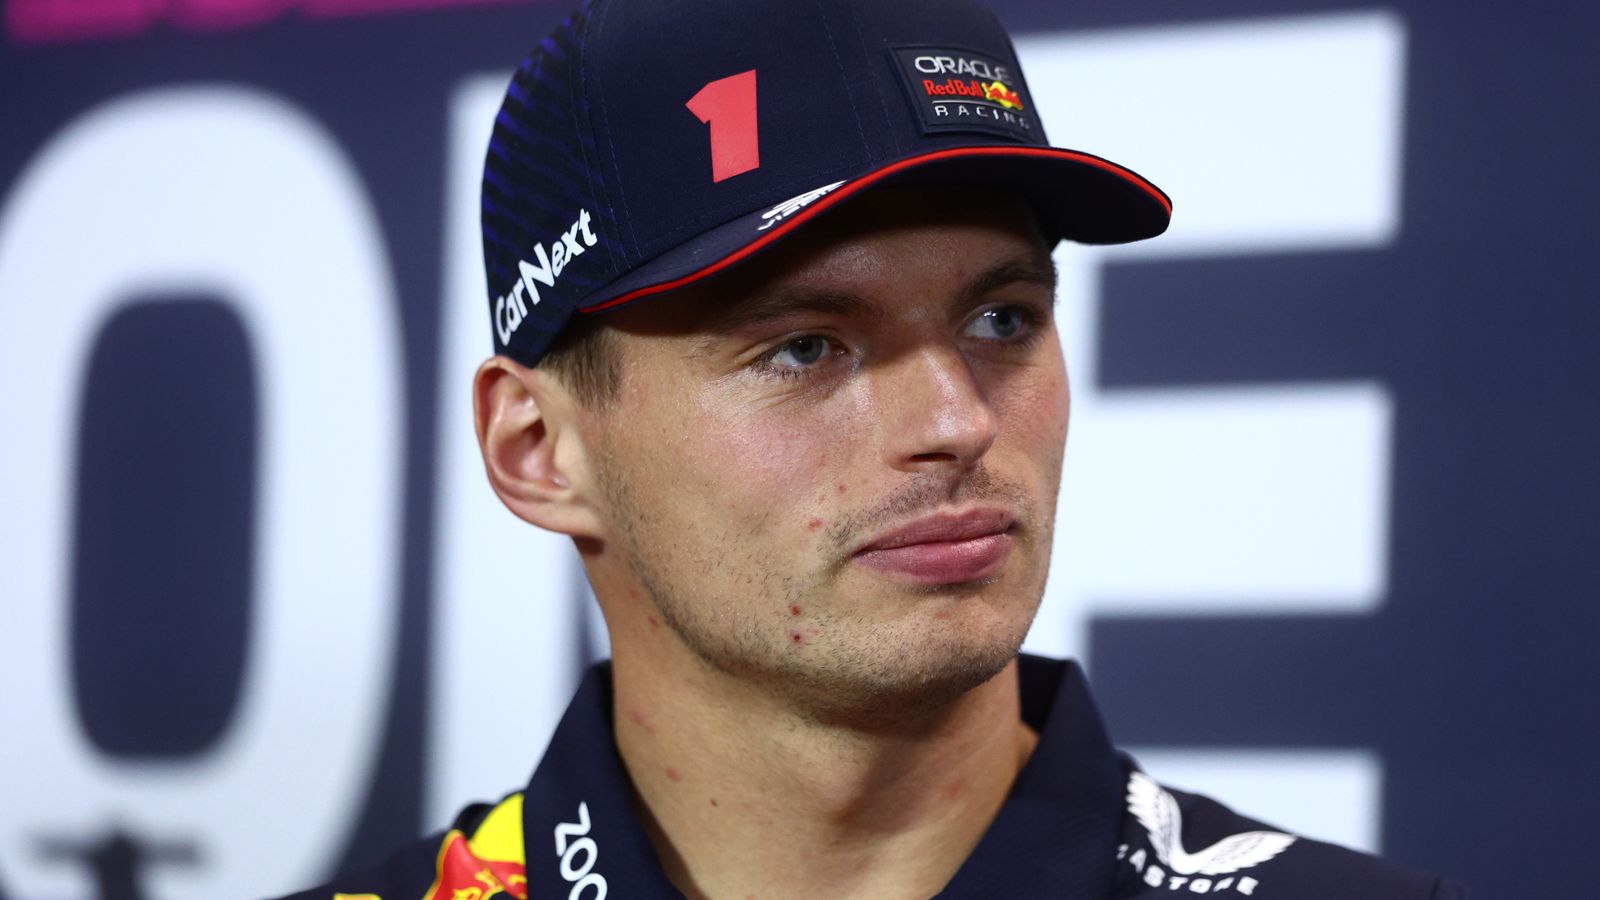 Verstappen: Wolff sounds like a Red Bull employee, luckily he's not